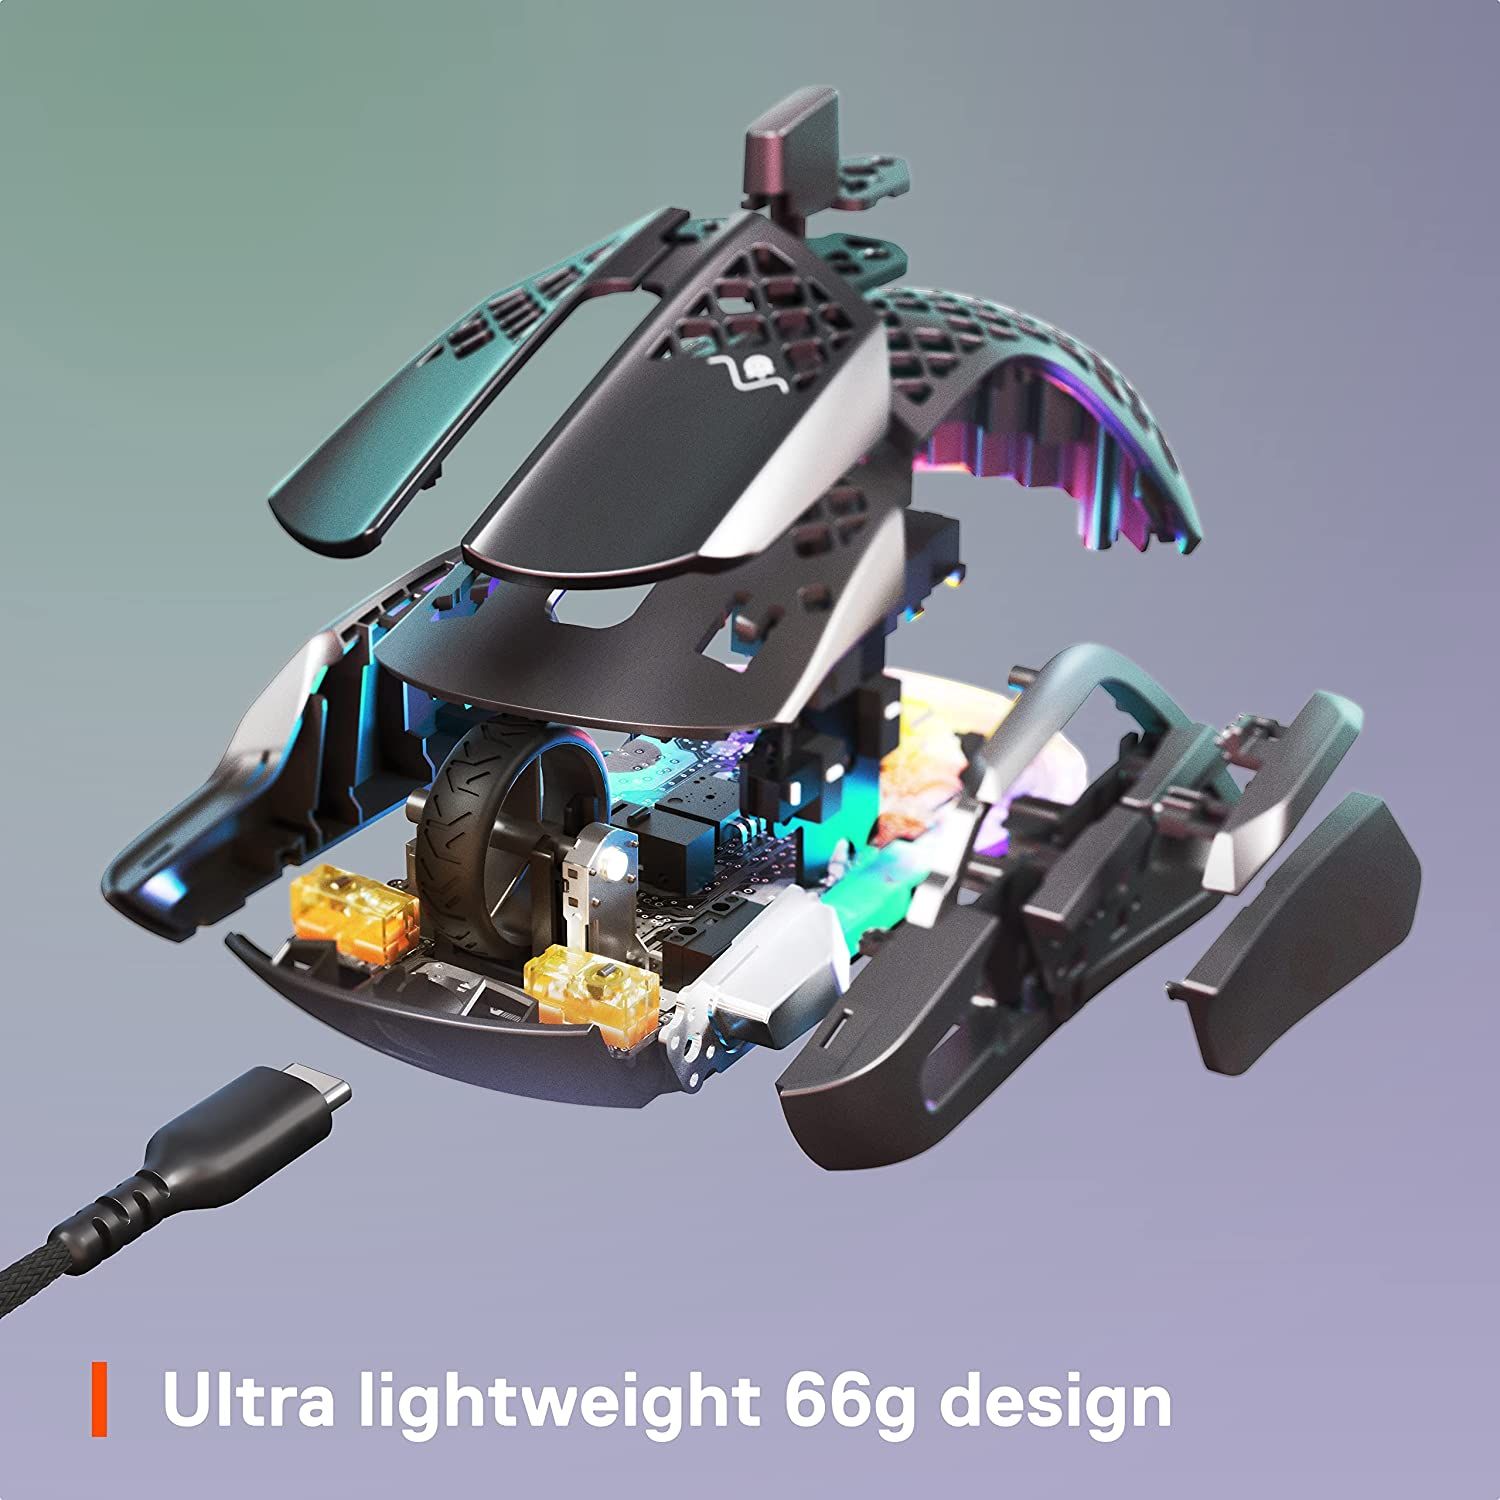 SteelSeries Aerox 5 Ultra lightweight